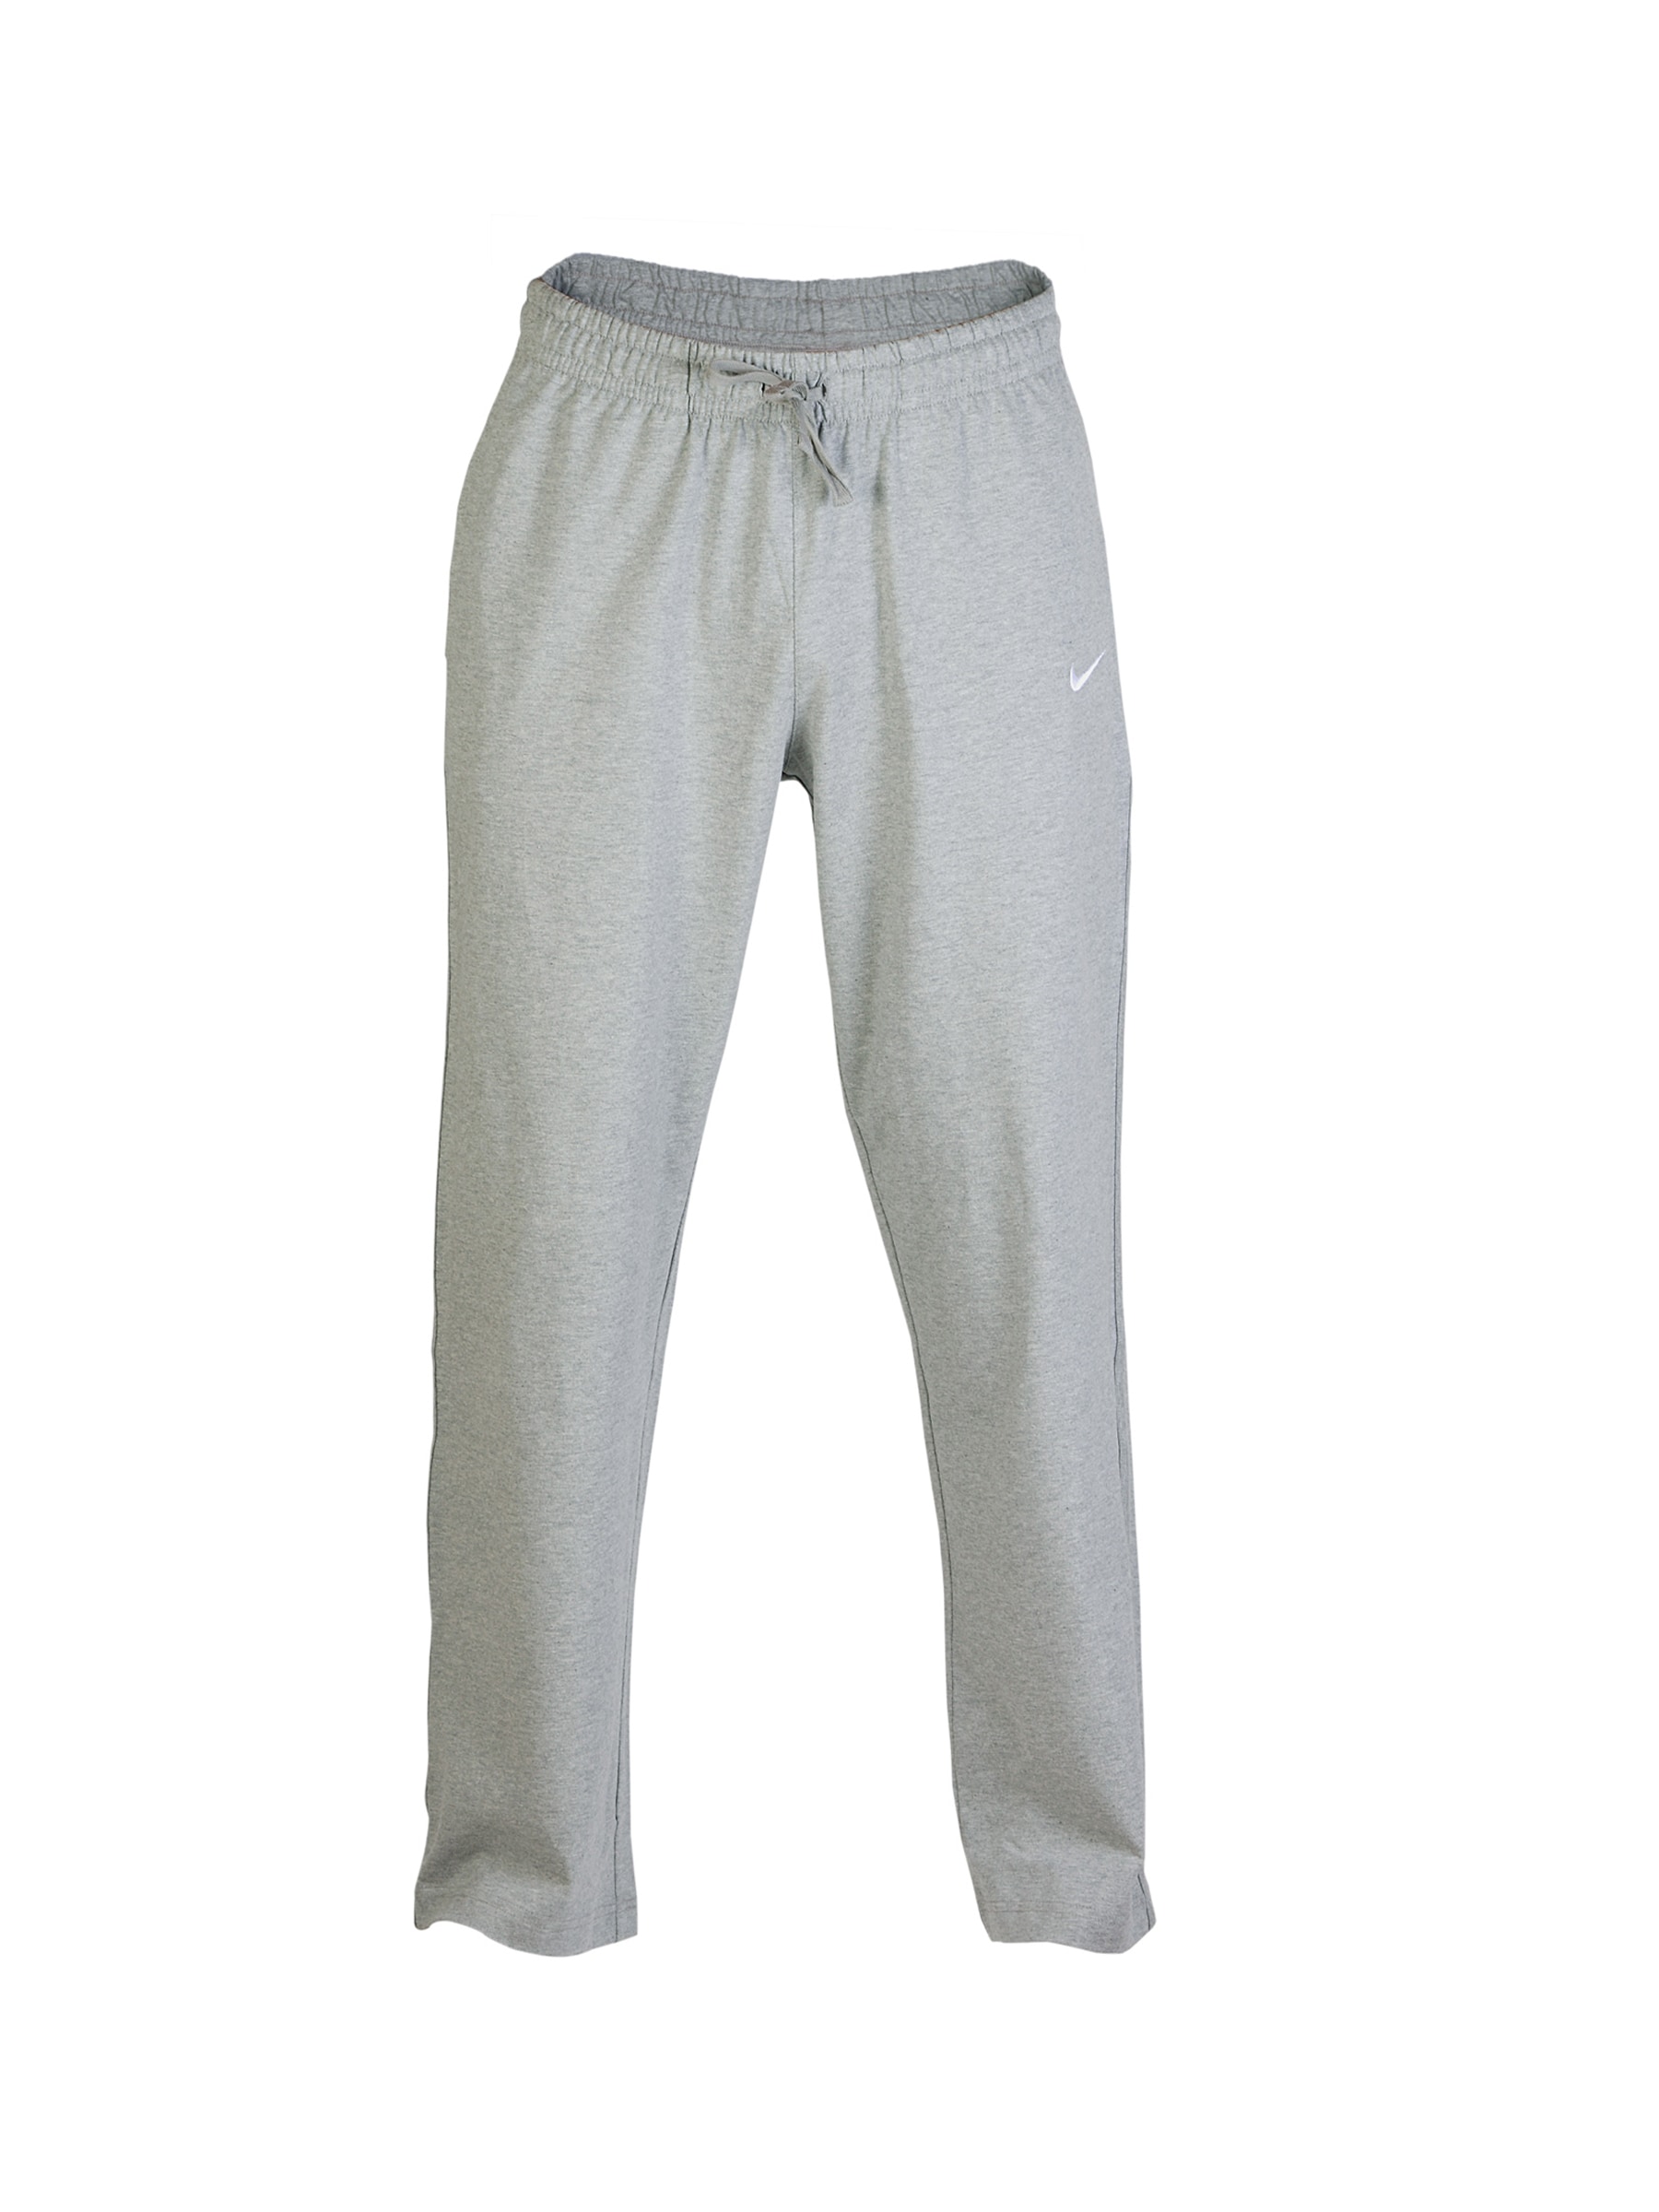 Nike Men Grey Track Pants